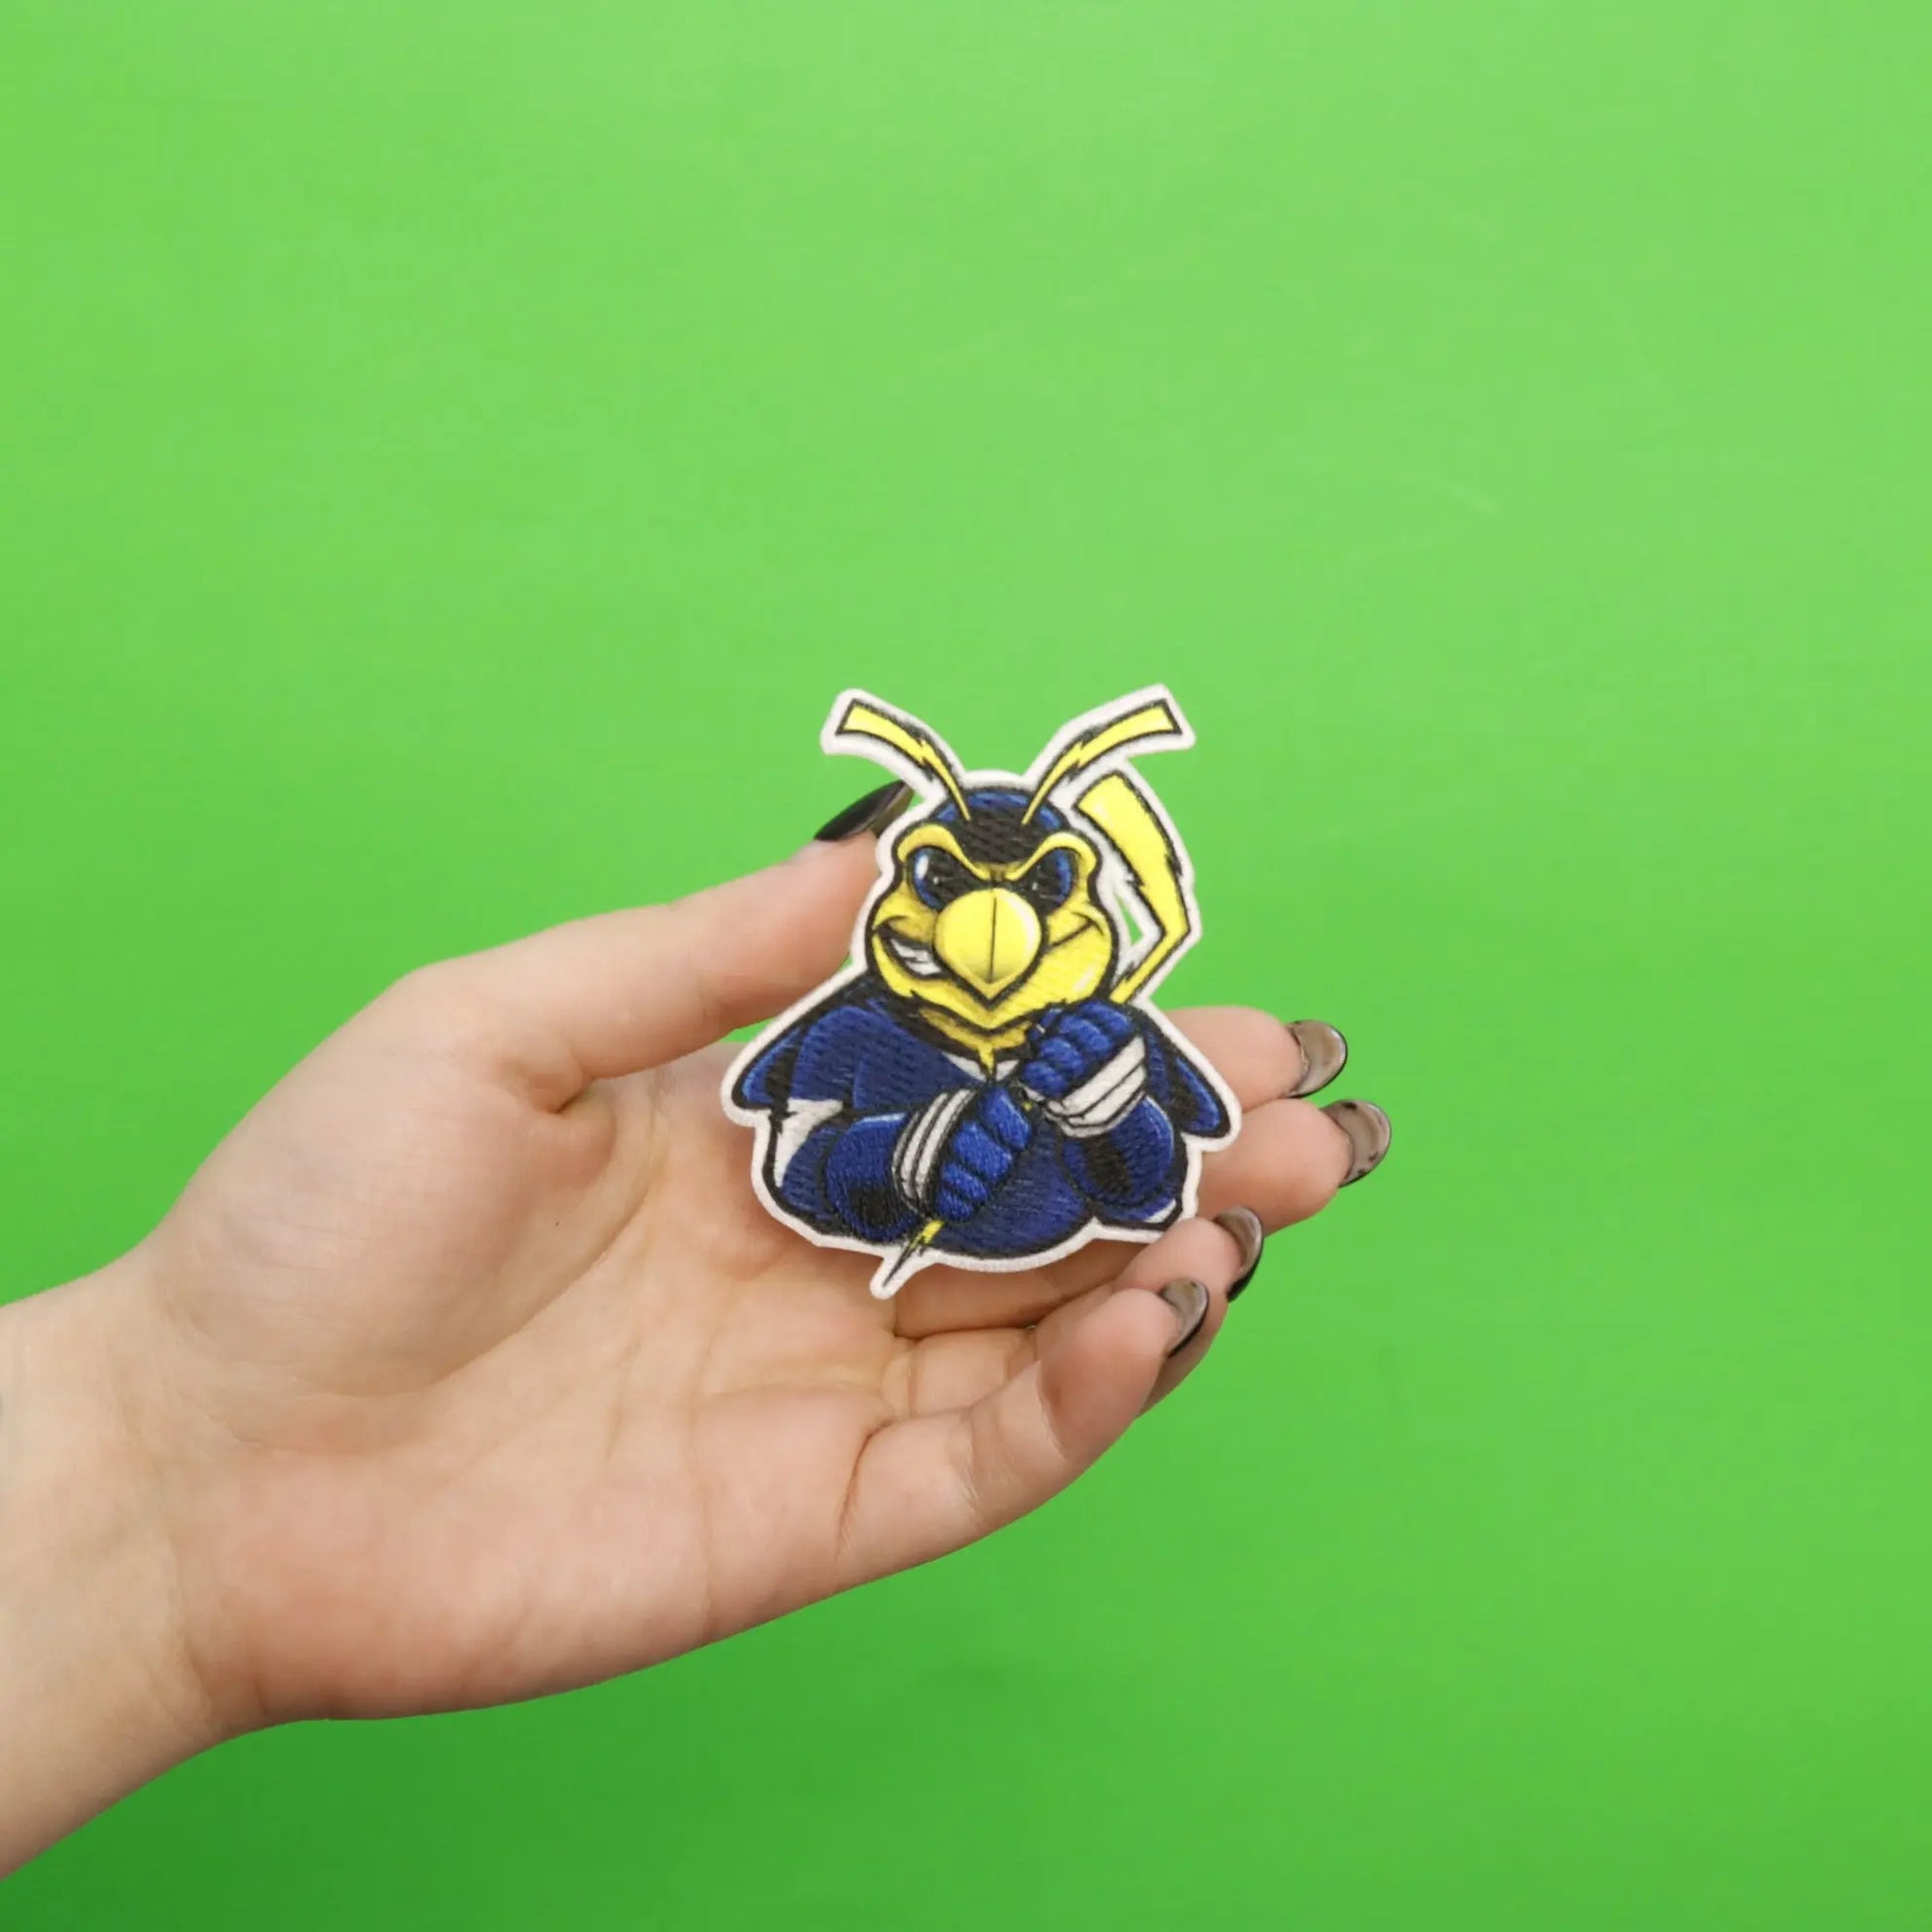 Tampa Bay Florida Lightning Bug FotoPatch Mascot Hockey Parody Embroidered Iron On 